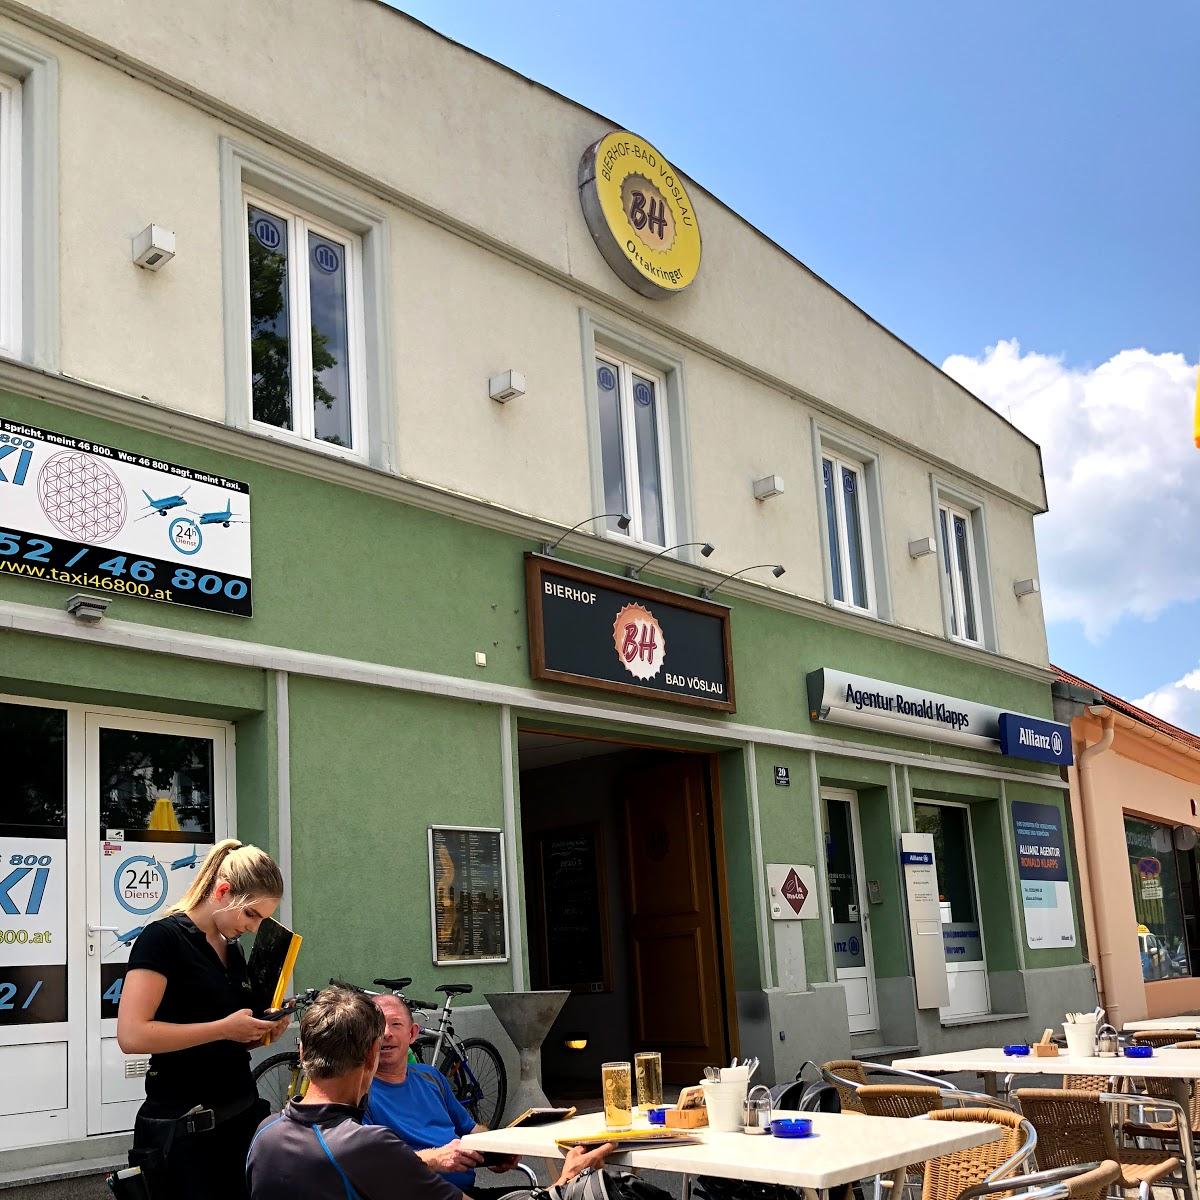 Restaurant "BH - Bierhof" in Bad Vöslau